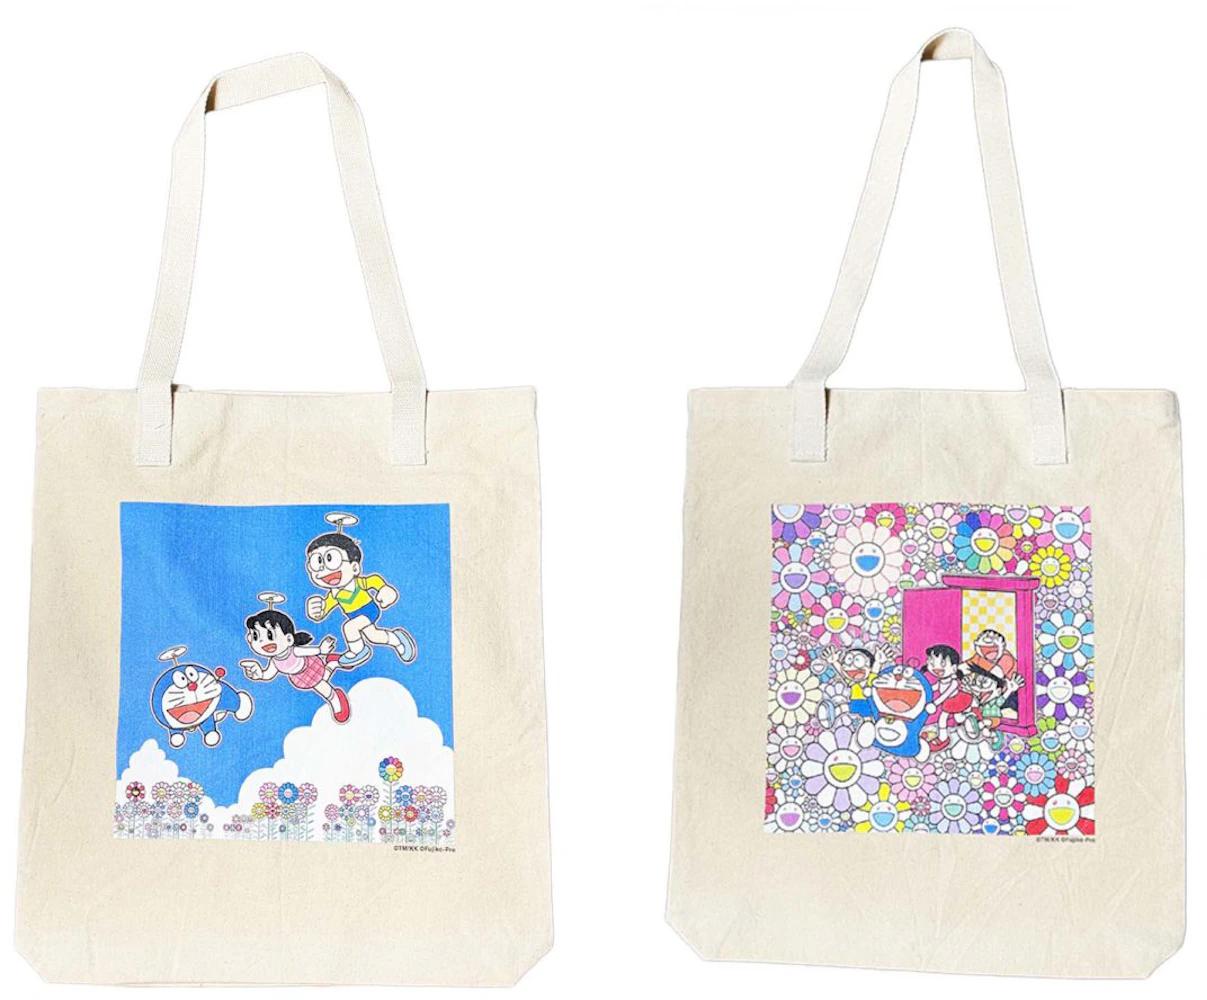 Takashi Murakami  Tote Bag for Sale by digimane